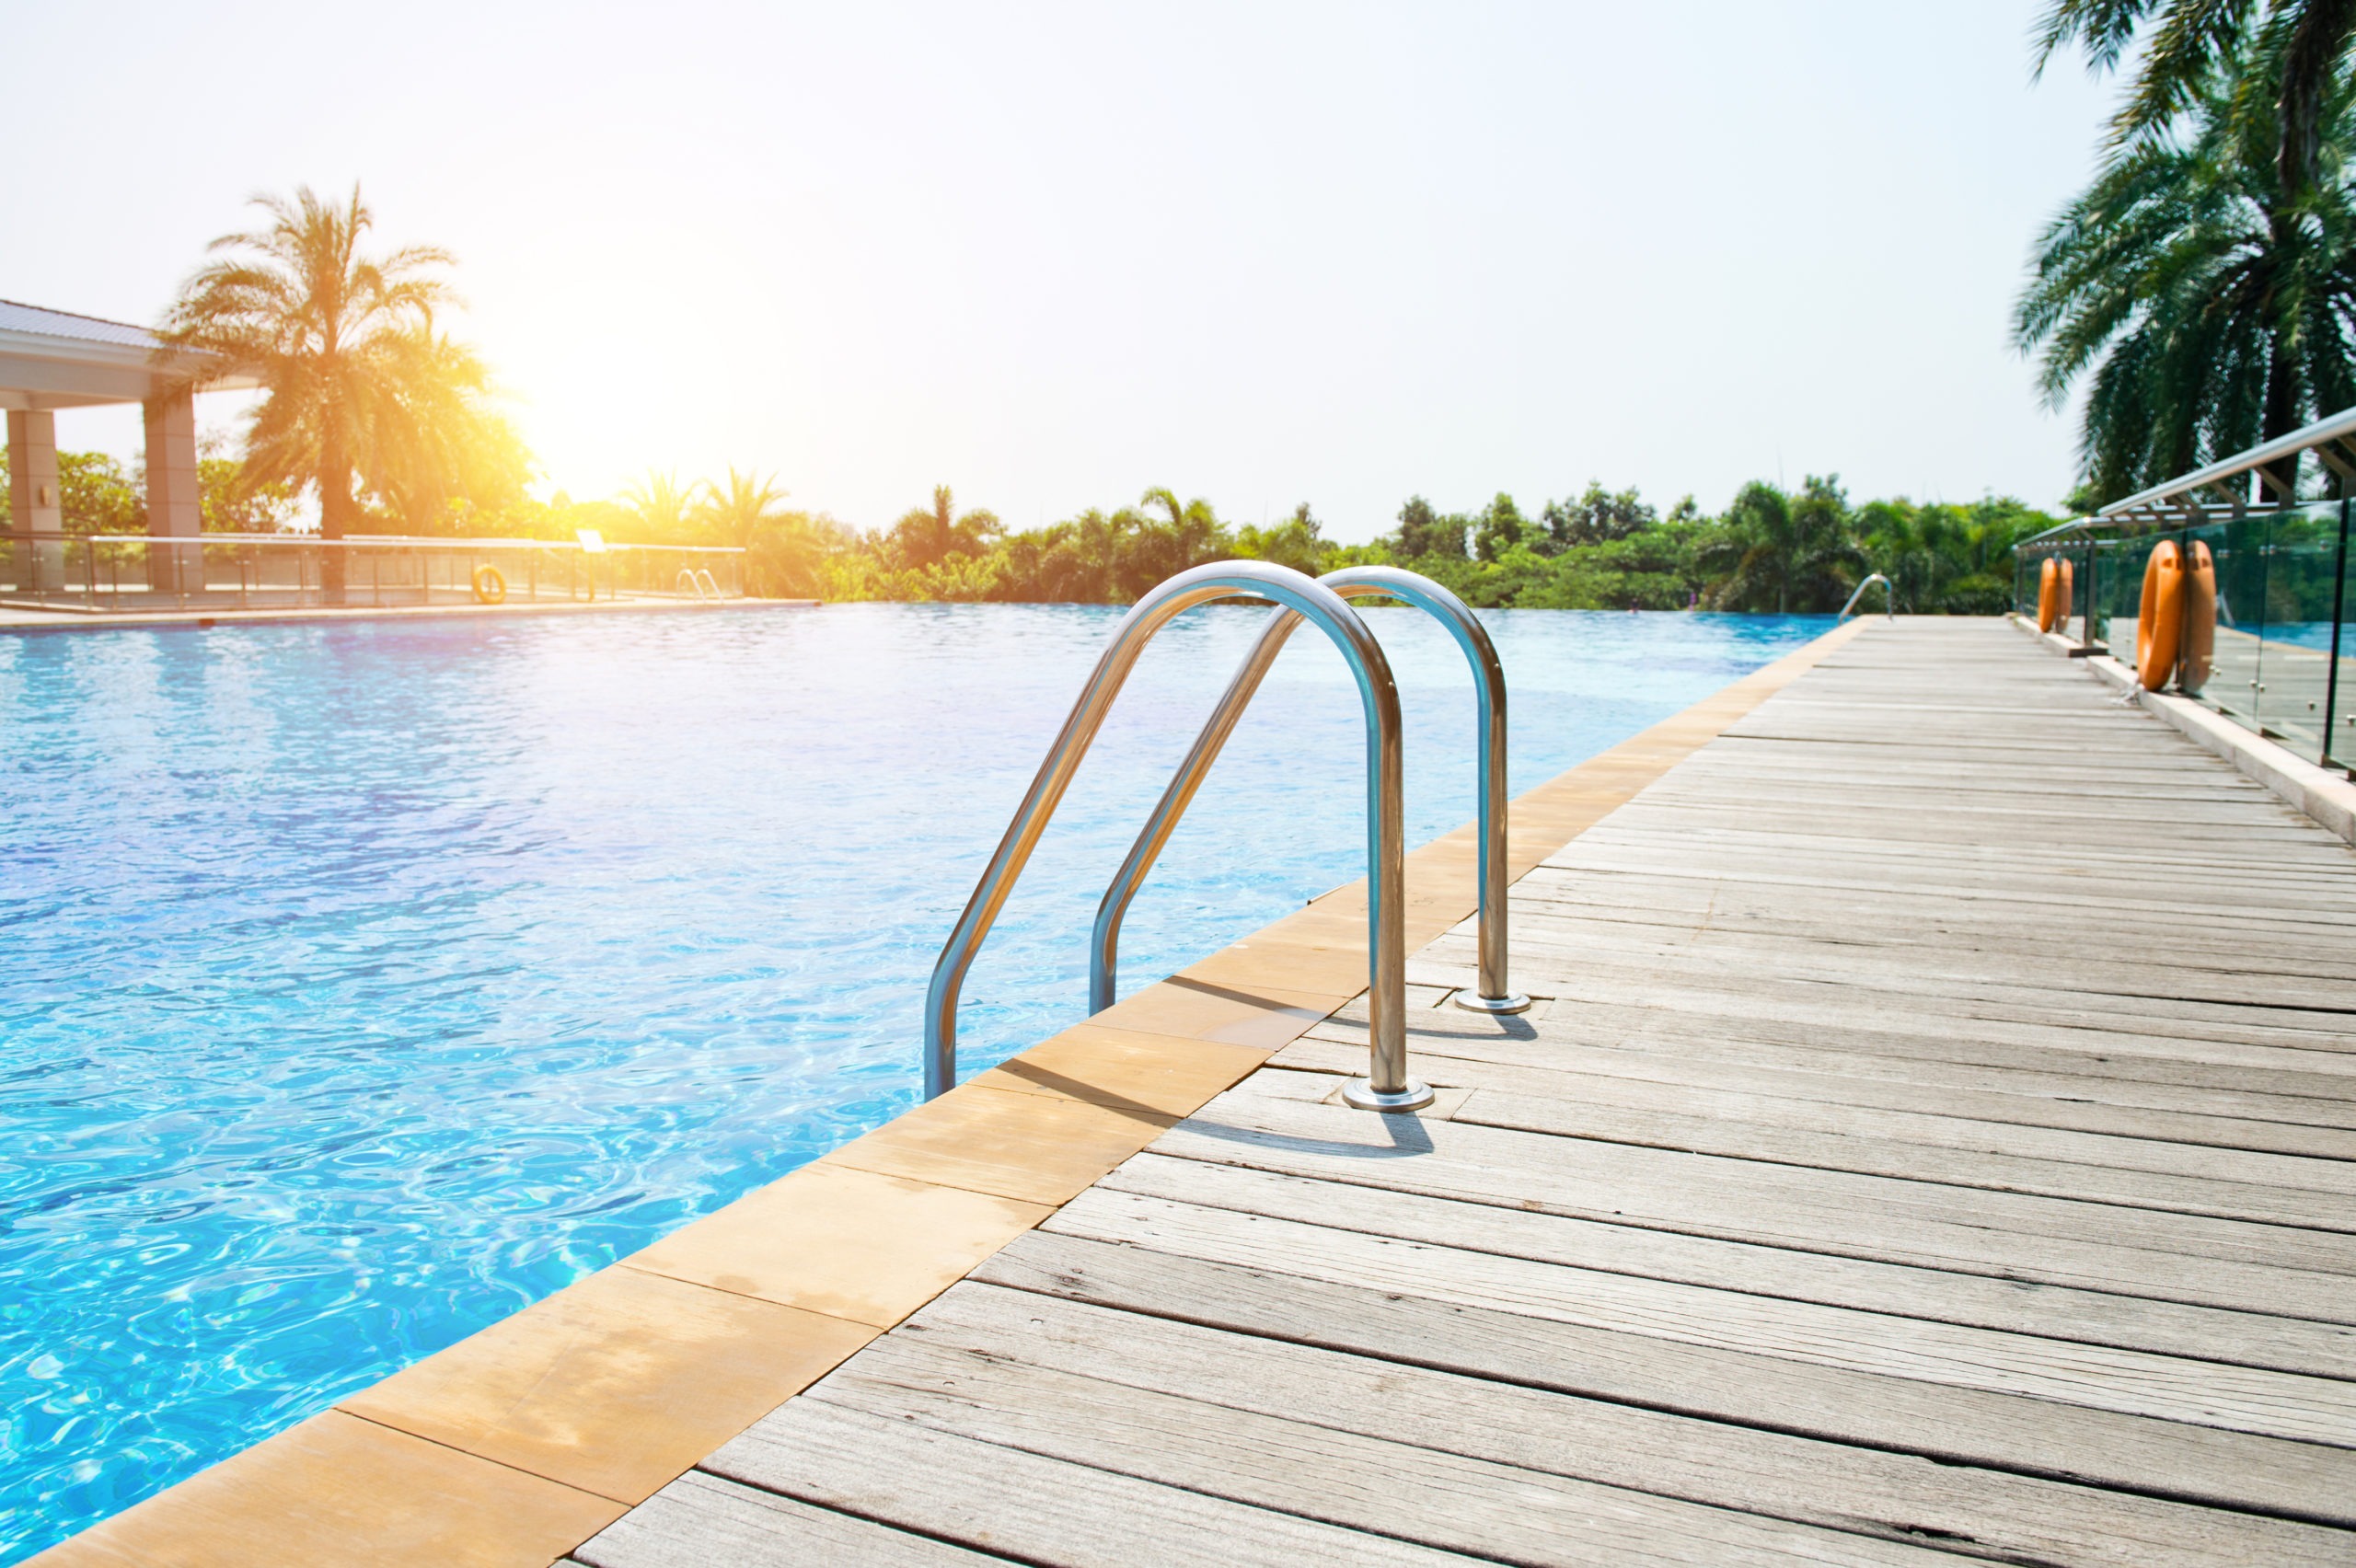 entrapment prevention in swimming pools